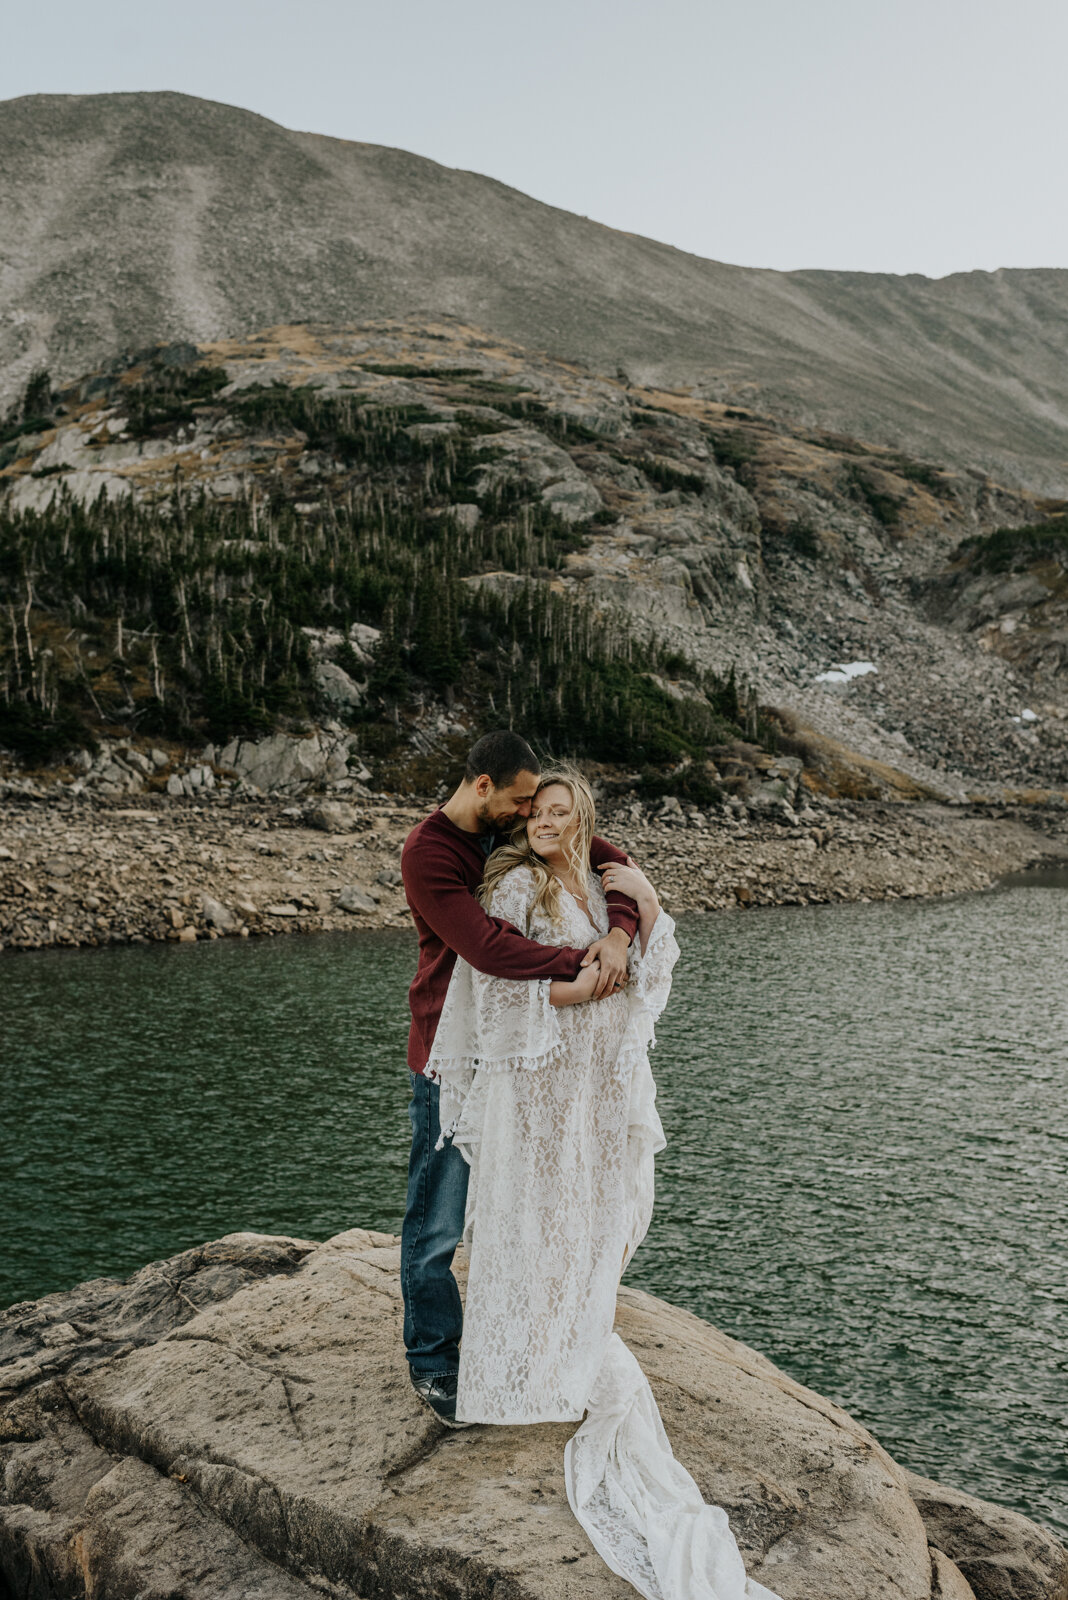 Indian Peaks Wilderness Area Wedding Photographer, CO